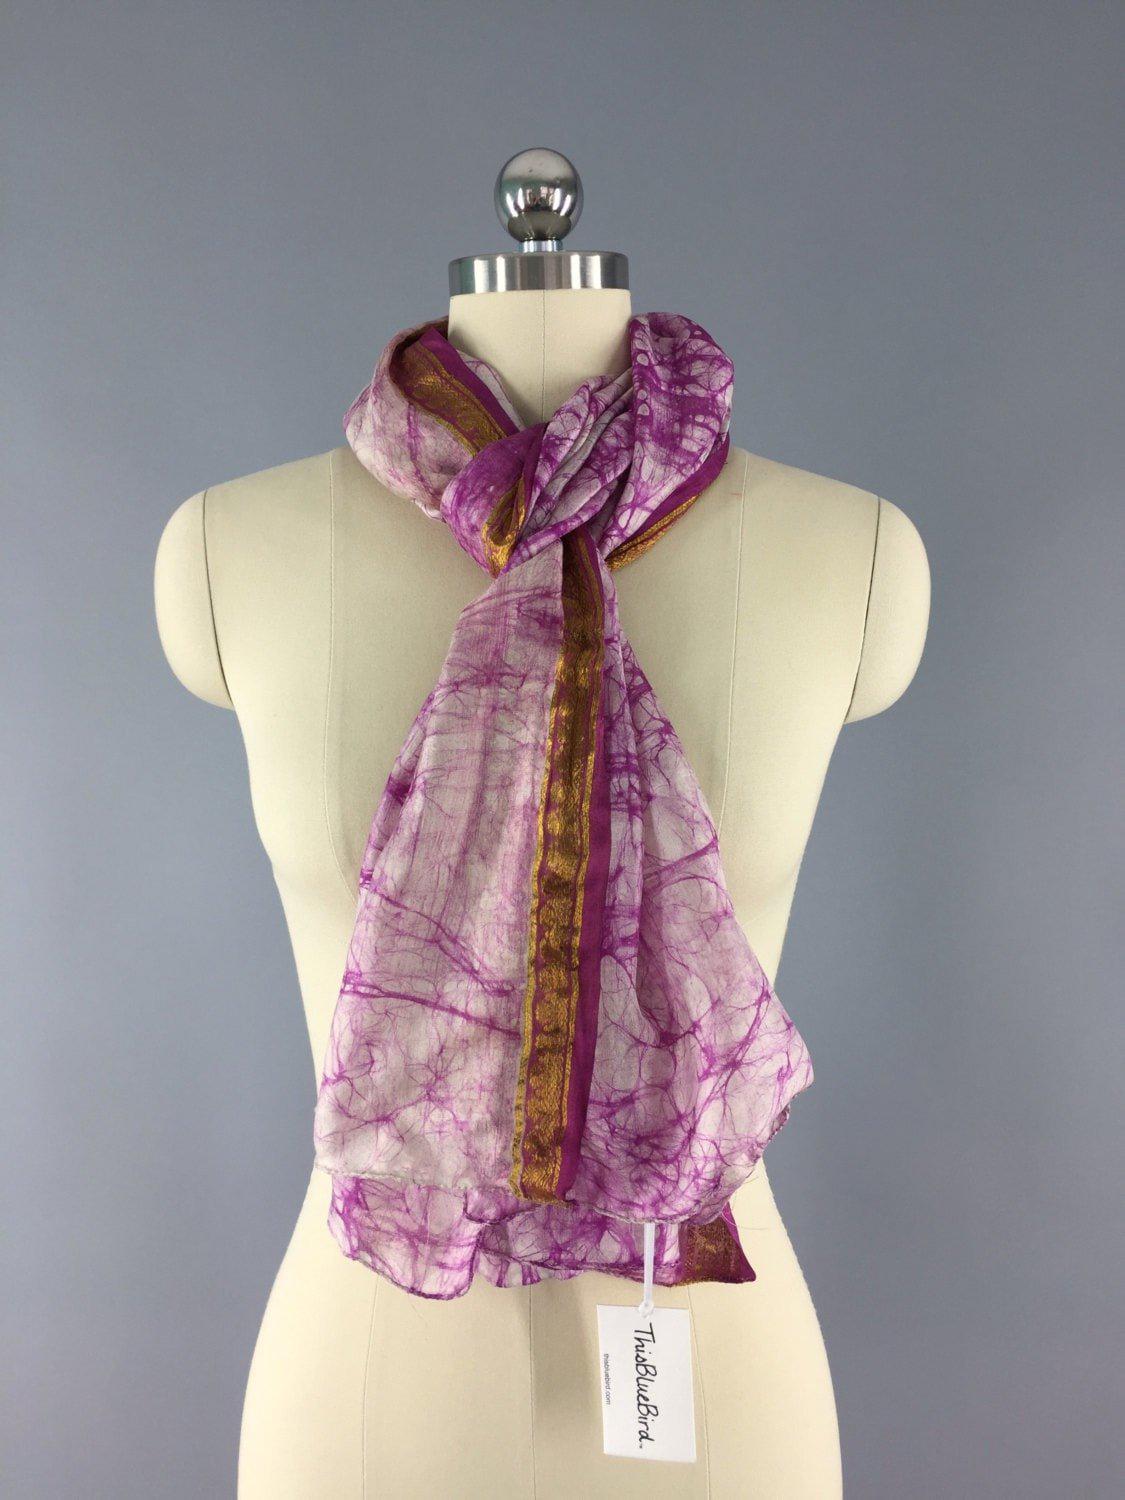 Silk Sari Scarf Shawl Wrap / Tie Dye Batik Print / 96 Inches Long - ThisBlueBird